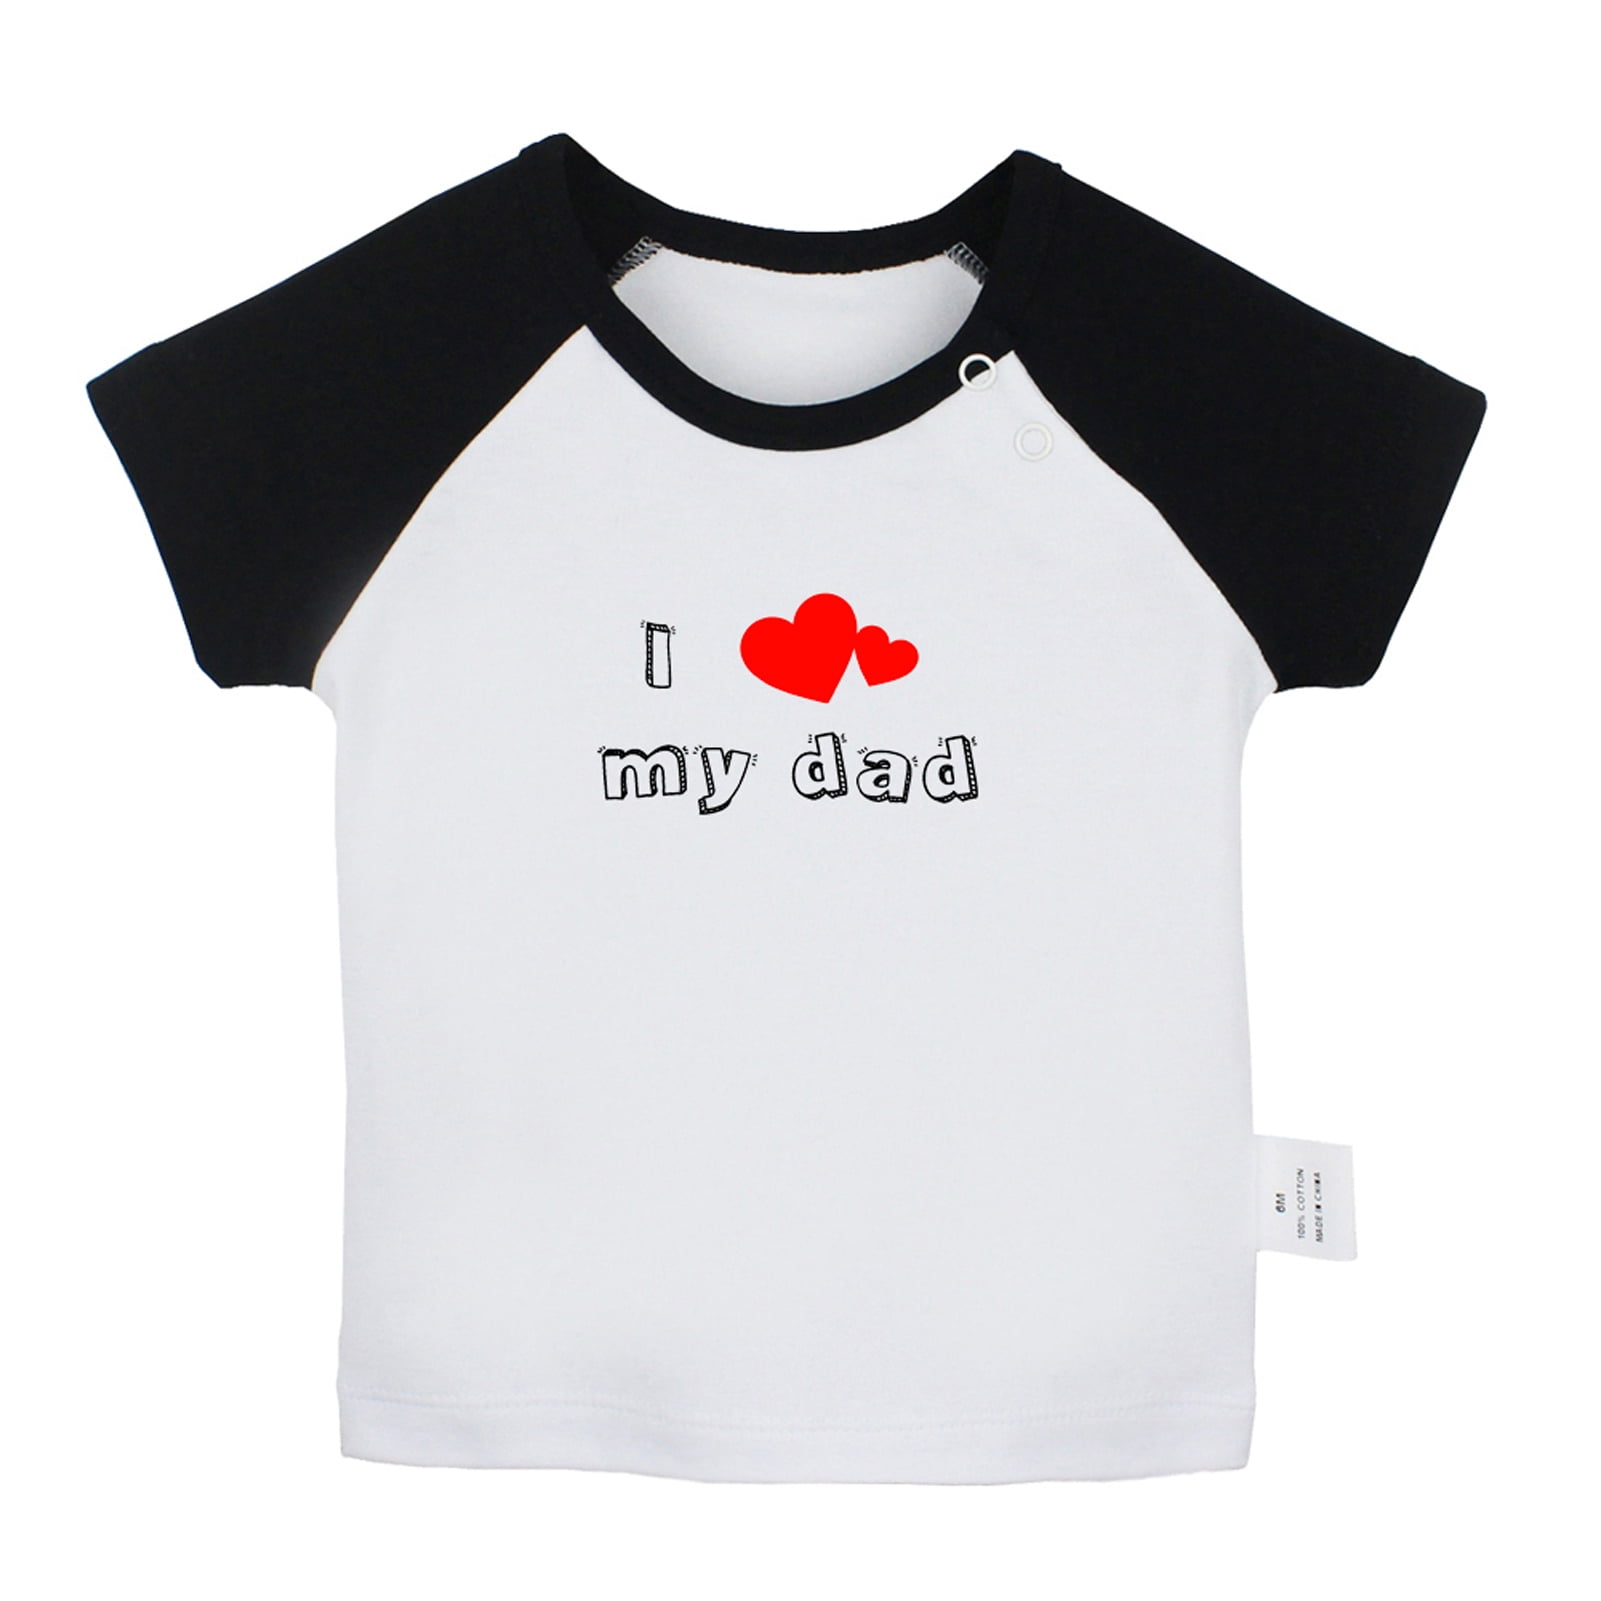 det samme Quilt beskydning I Love My Dad Novelty T shirt For Baby, Newborn Babies T-shirts, Infant Tops,  0-24M Kids Graphic Tees Clothing (Short Black Raglan T-shirt, 12-18 Months)  - Walmart.com